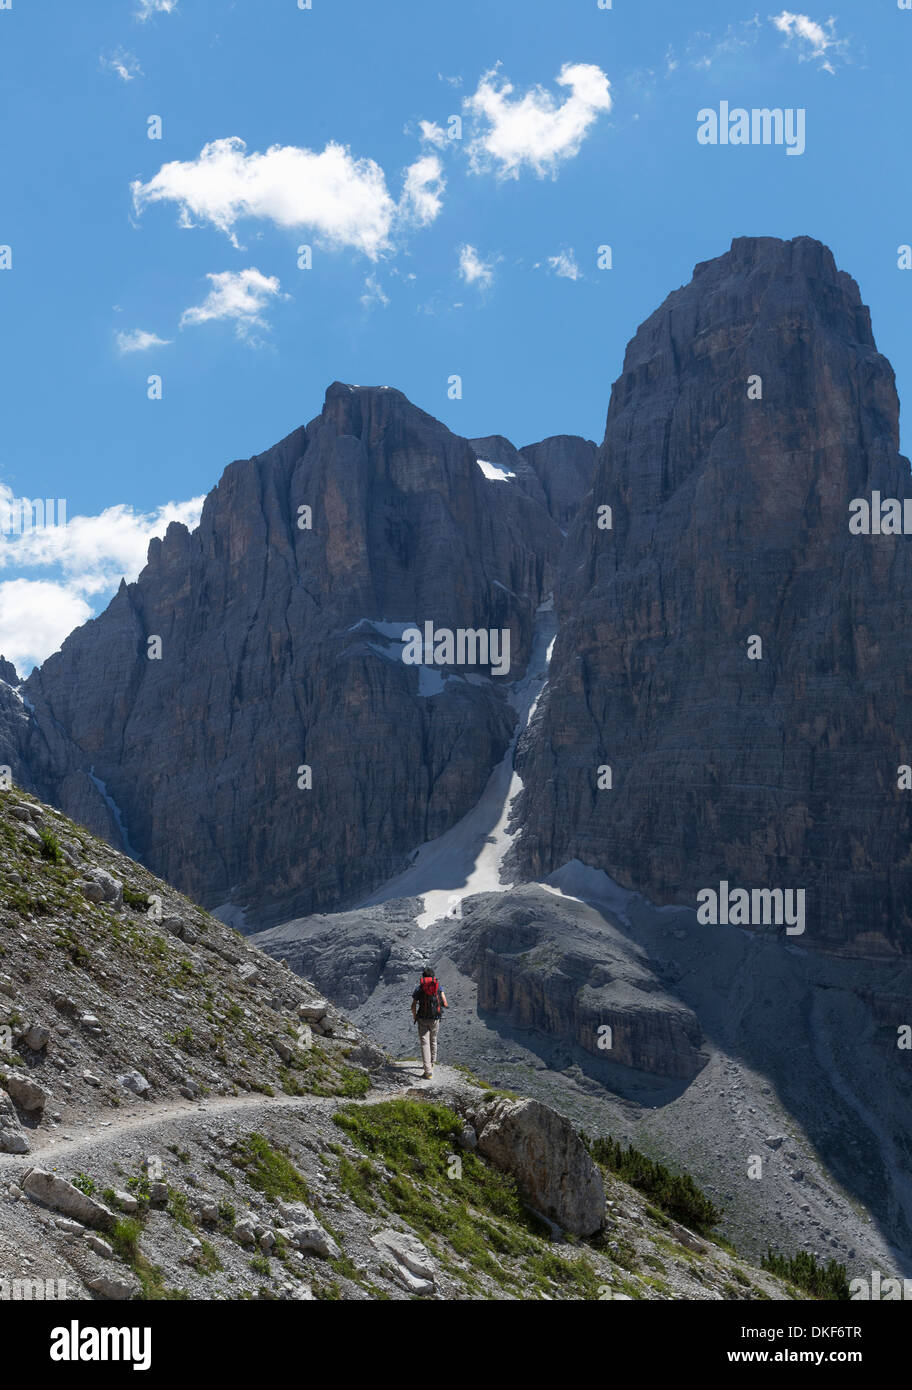 Climber approaching rocky peak, Brenta Dolomites, Italy Stock Photo